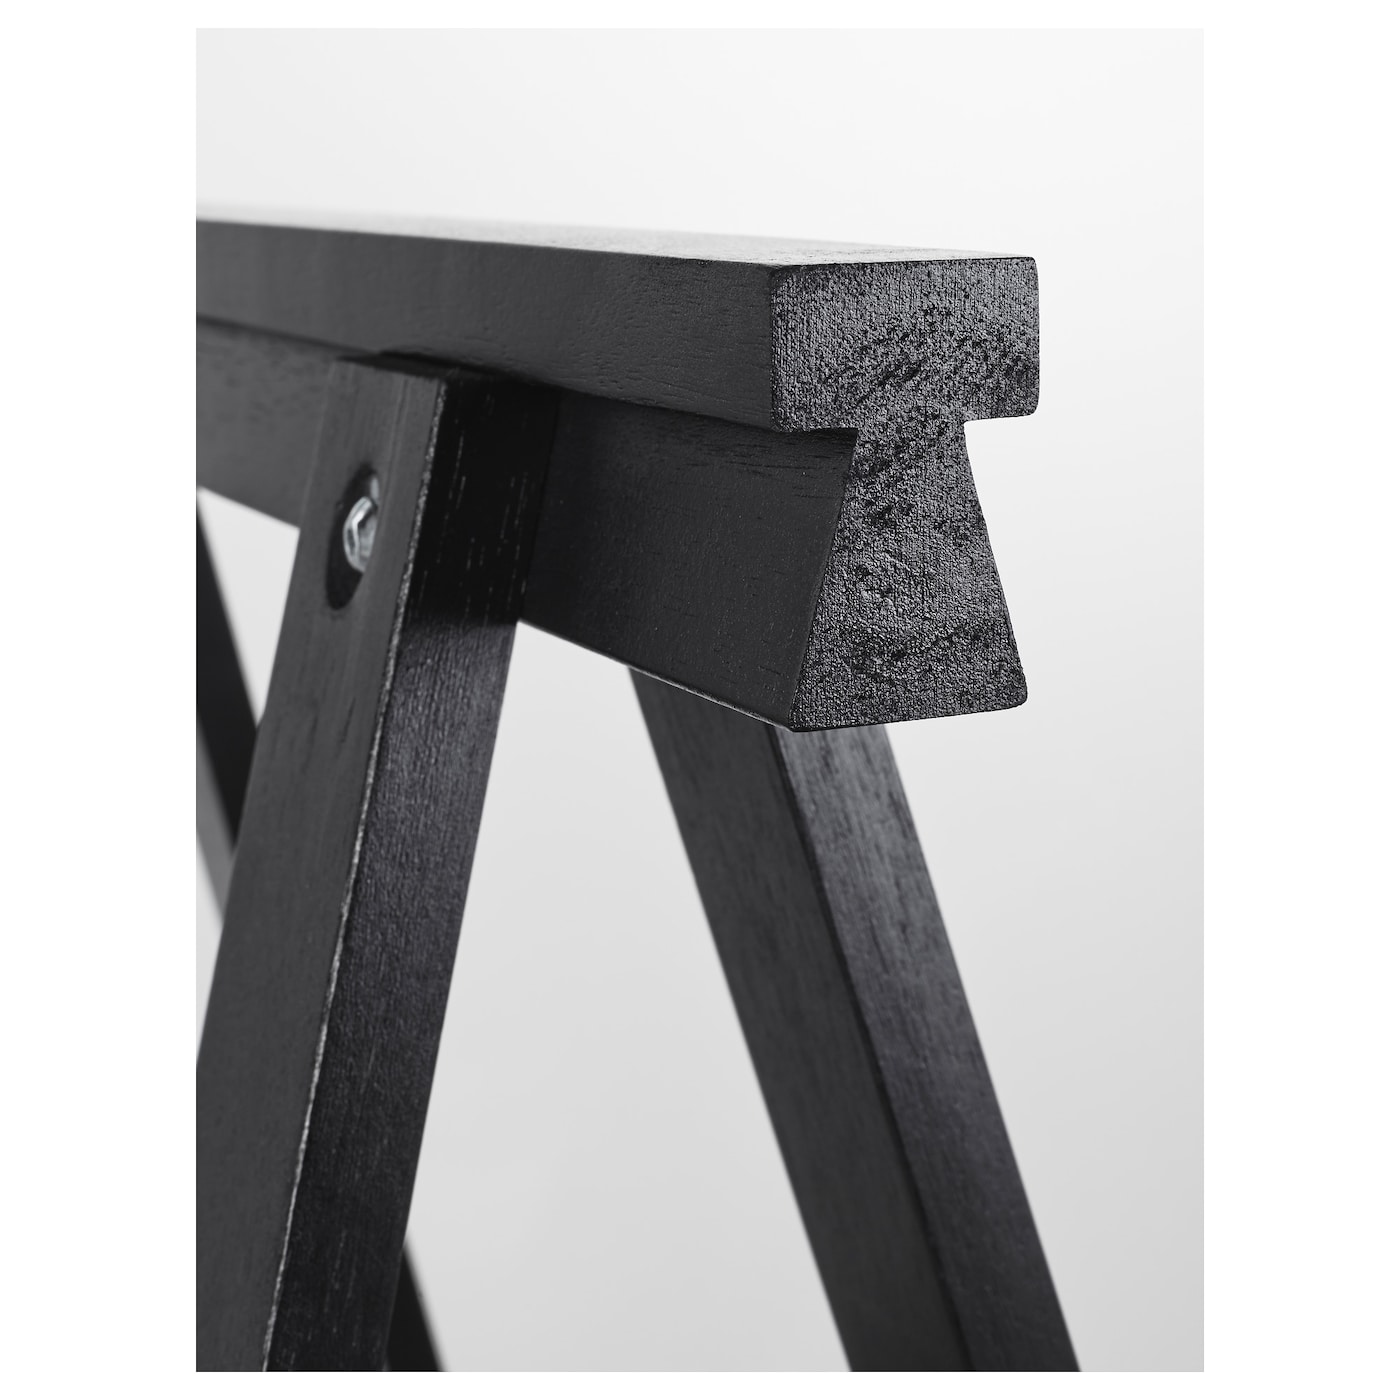 ODDVALD ОДВАЛЬД опора для стола, черный70x70 см